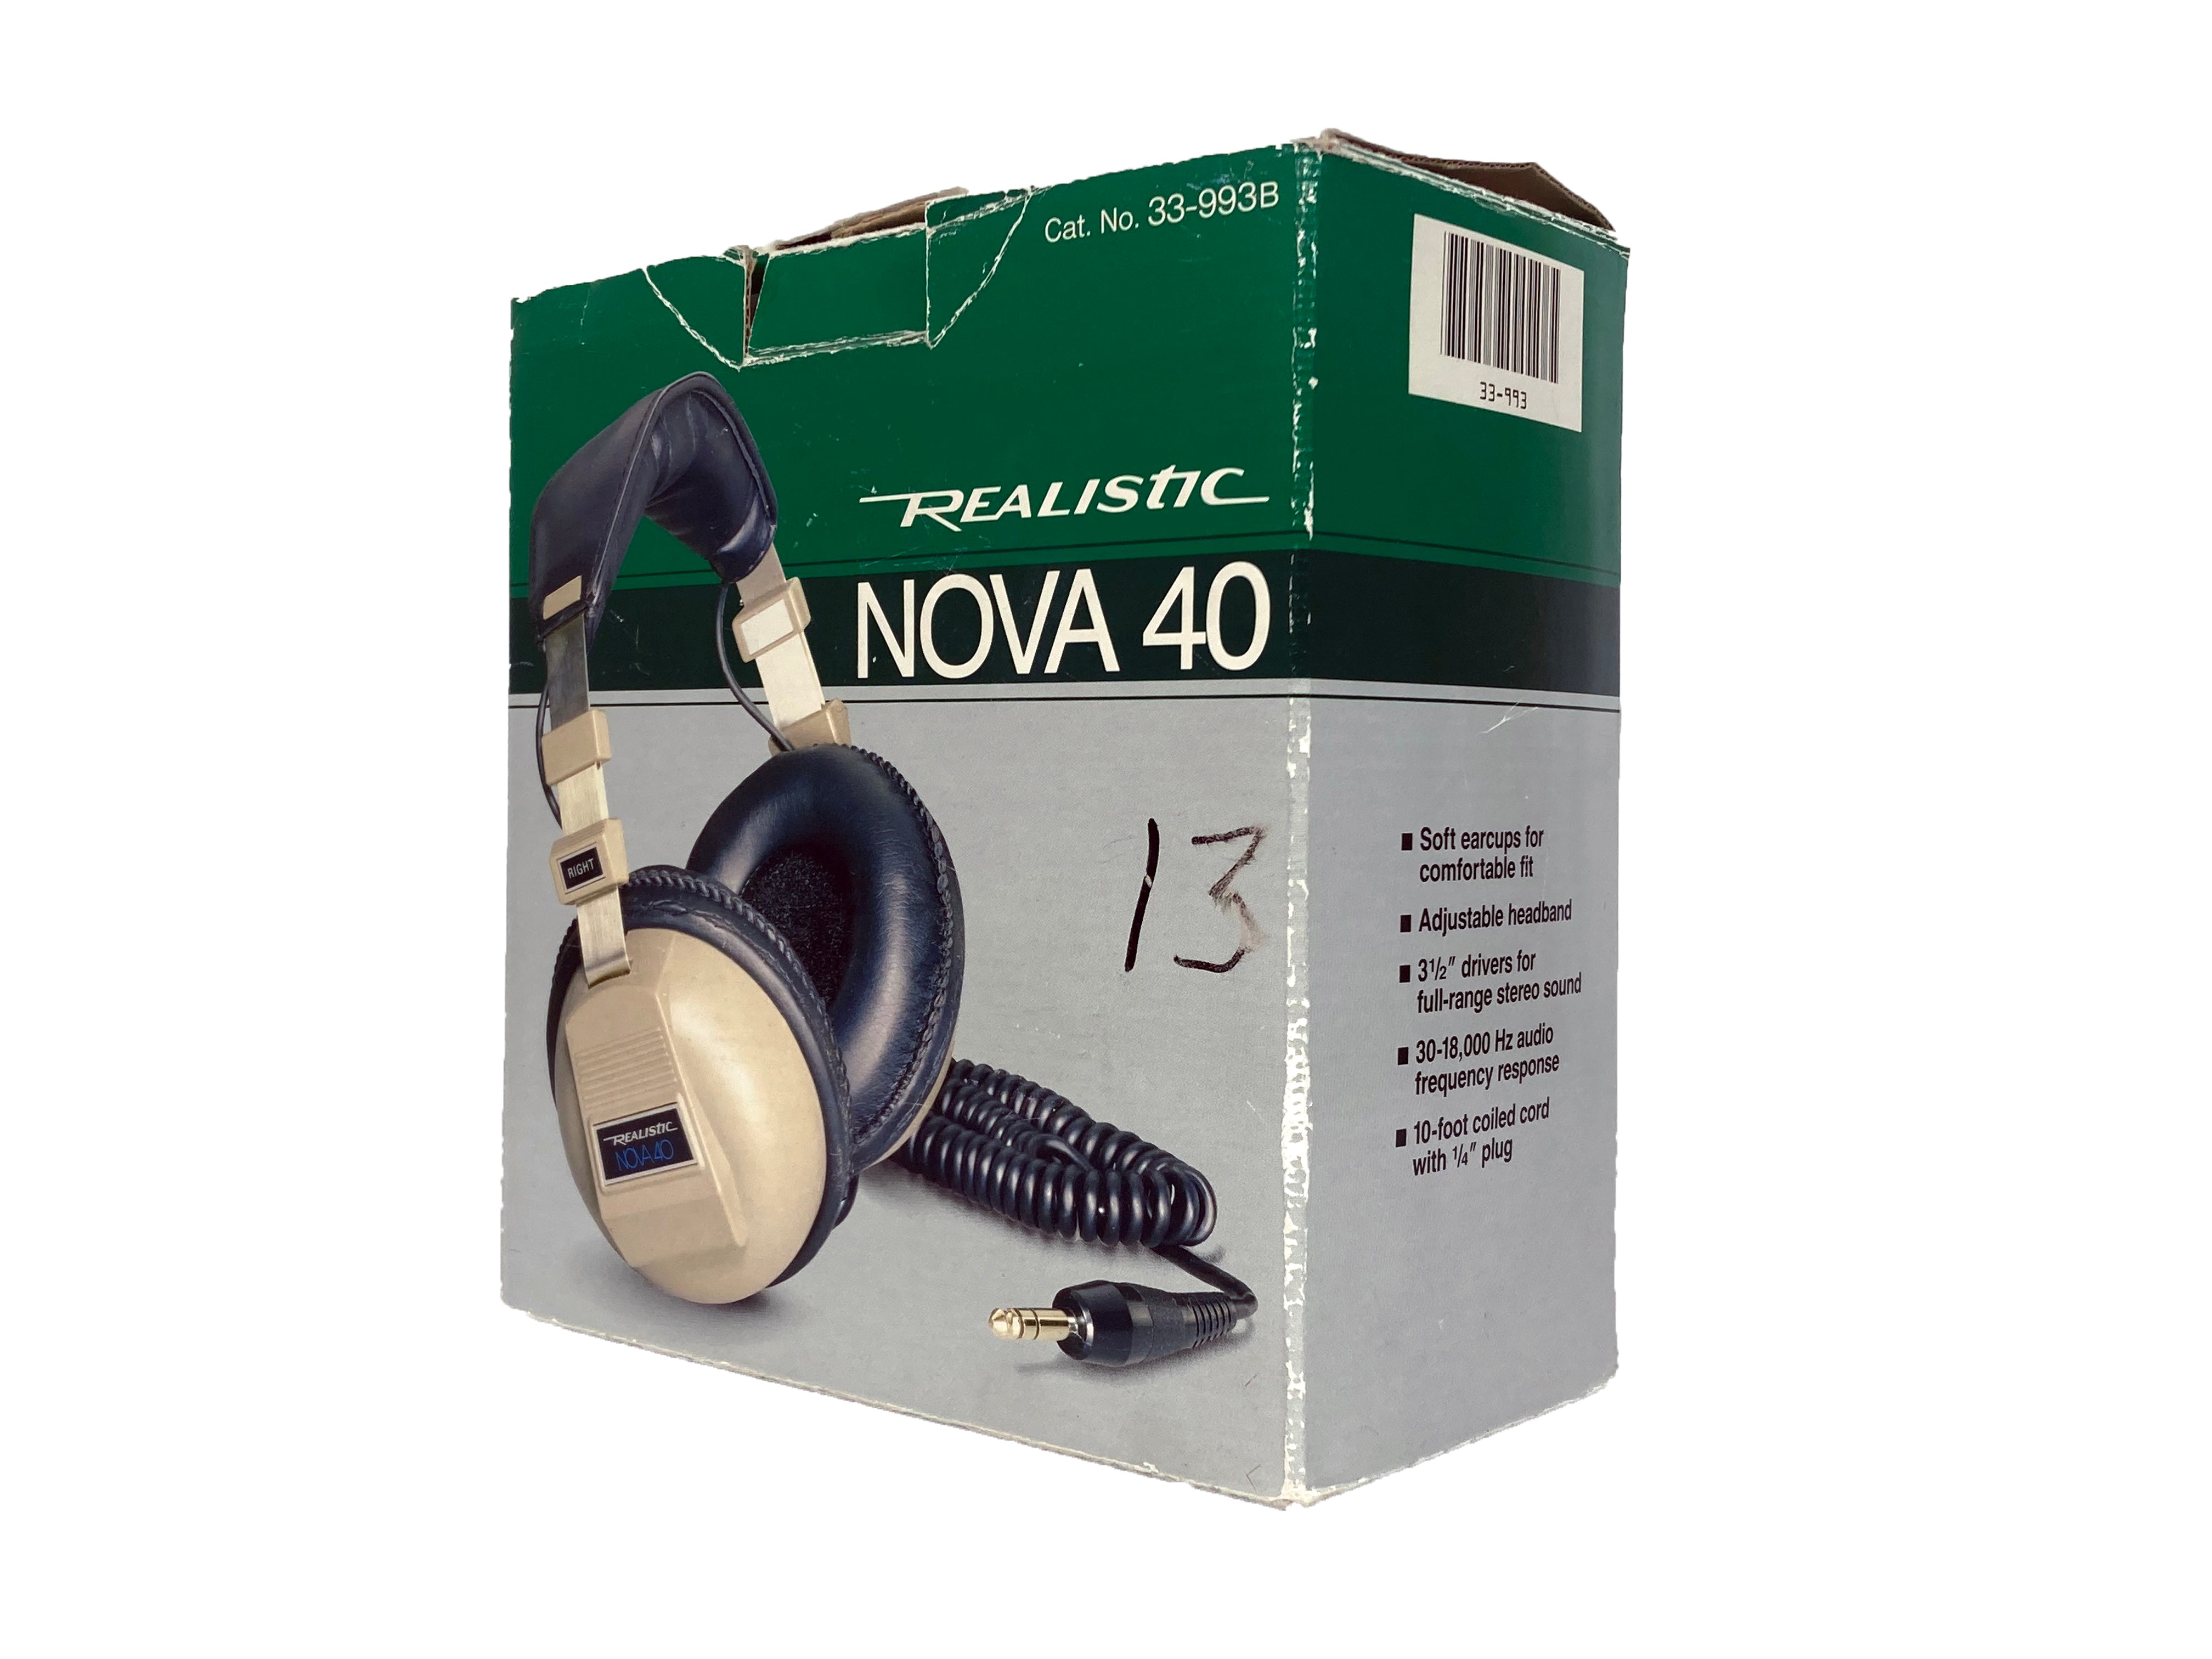 Realistic Nova 40 Vintage Headphones with Original Box